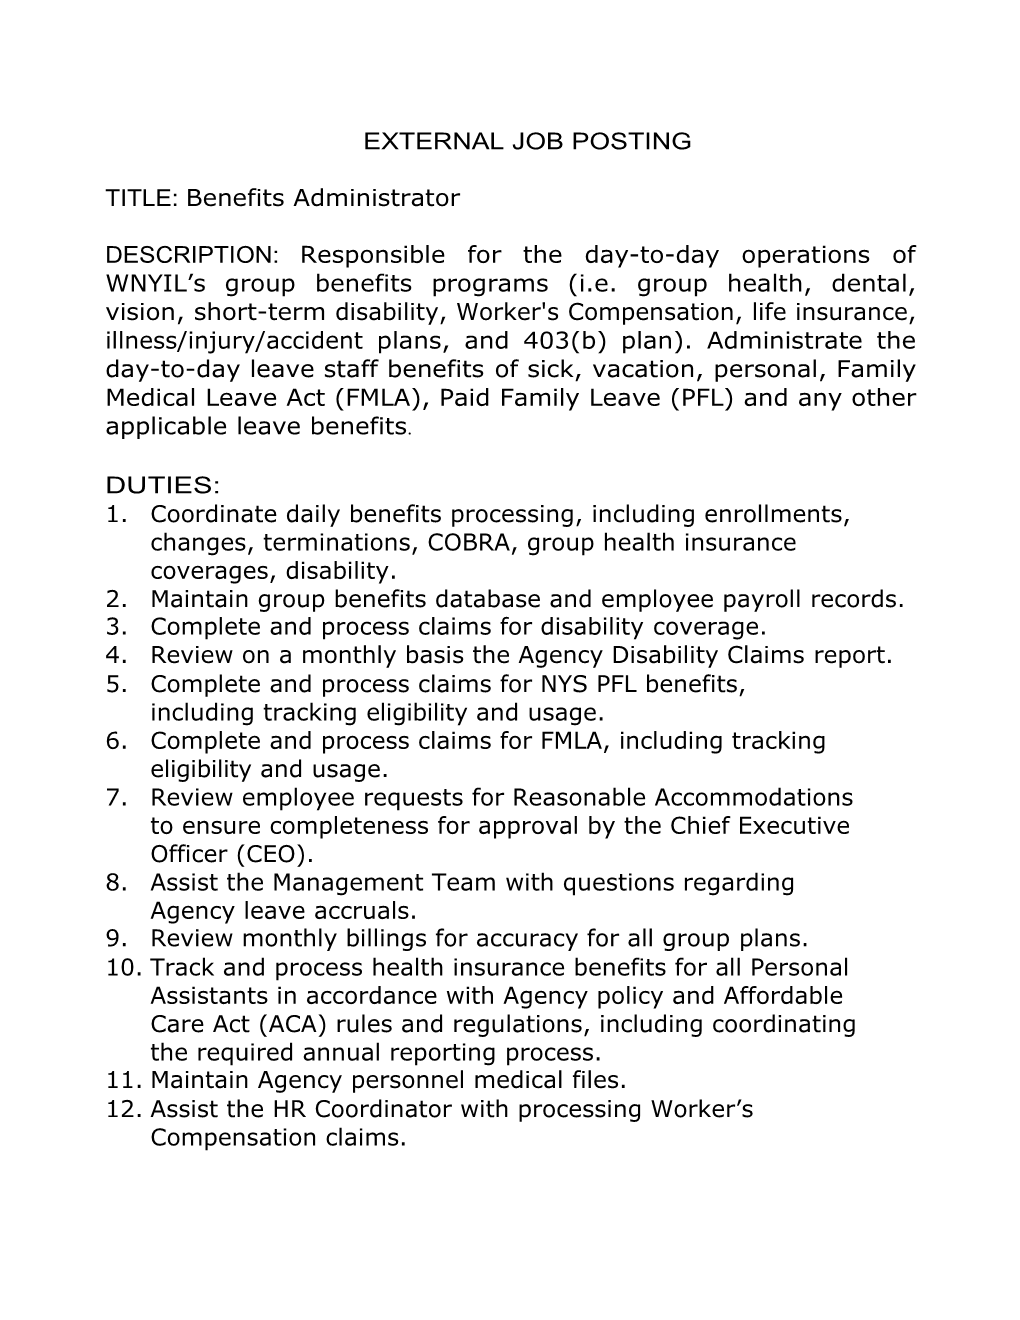 HR-Benefits Administrator